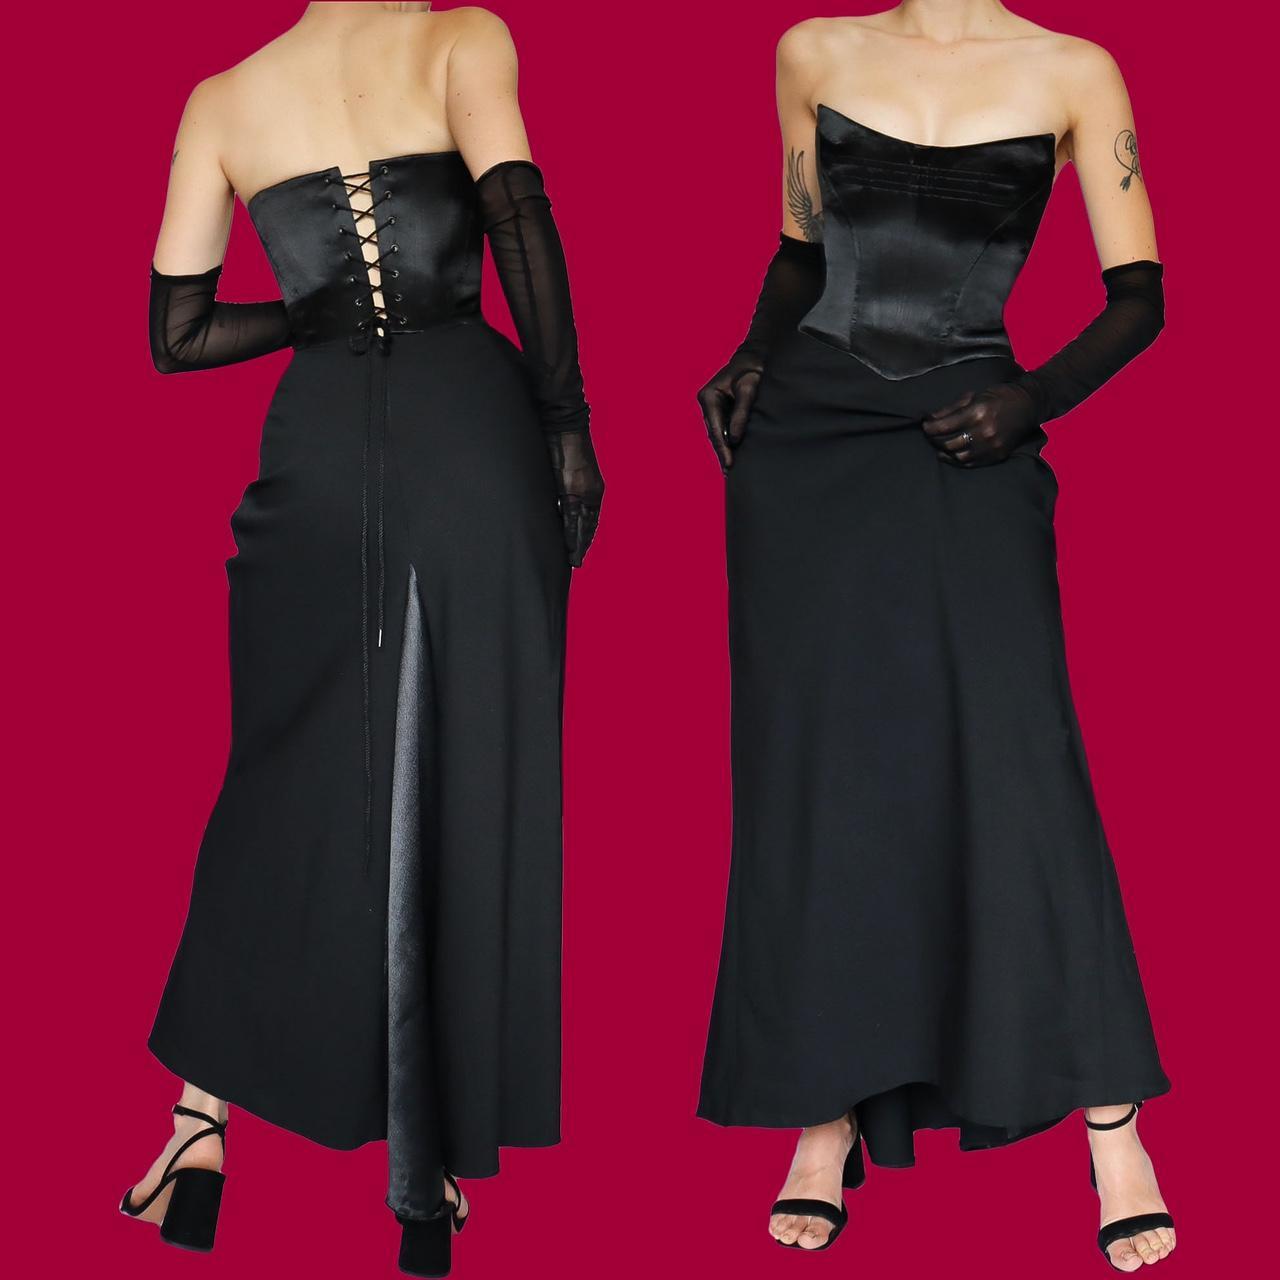 🌹Dawn Stretton black corset evening gown dress with... - Depop